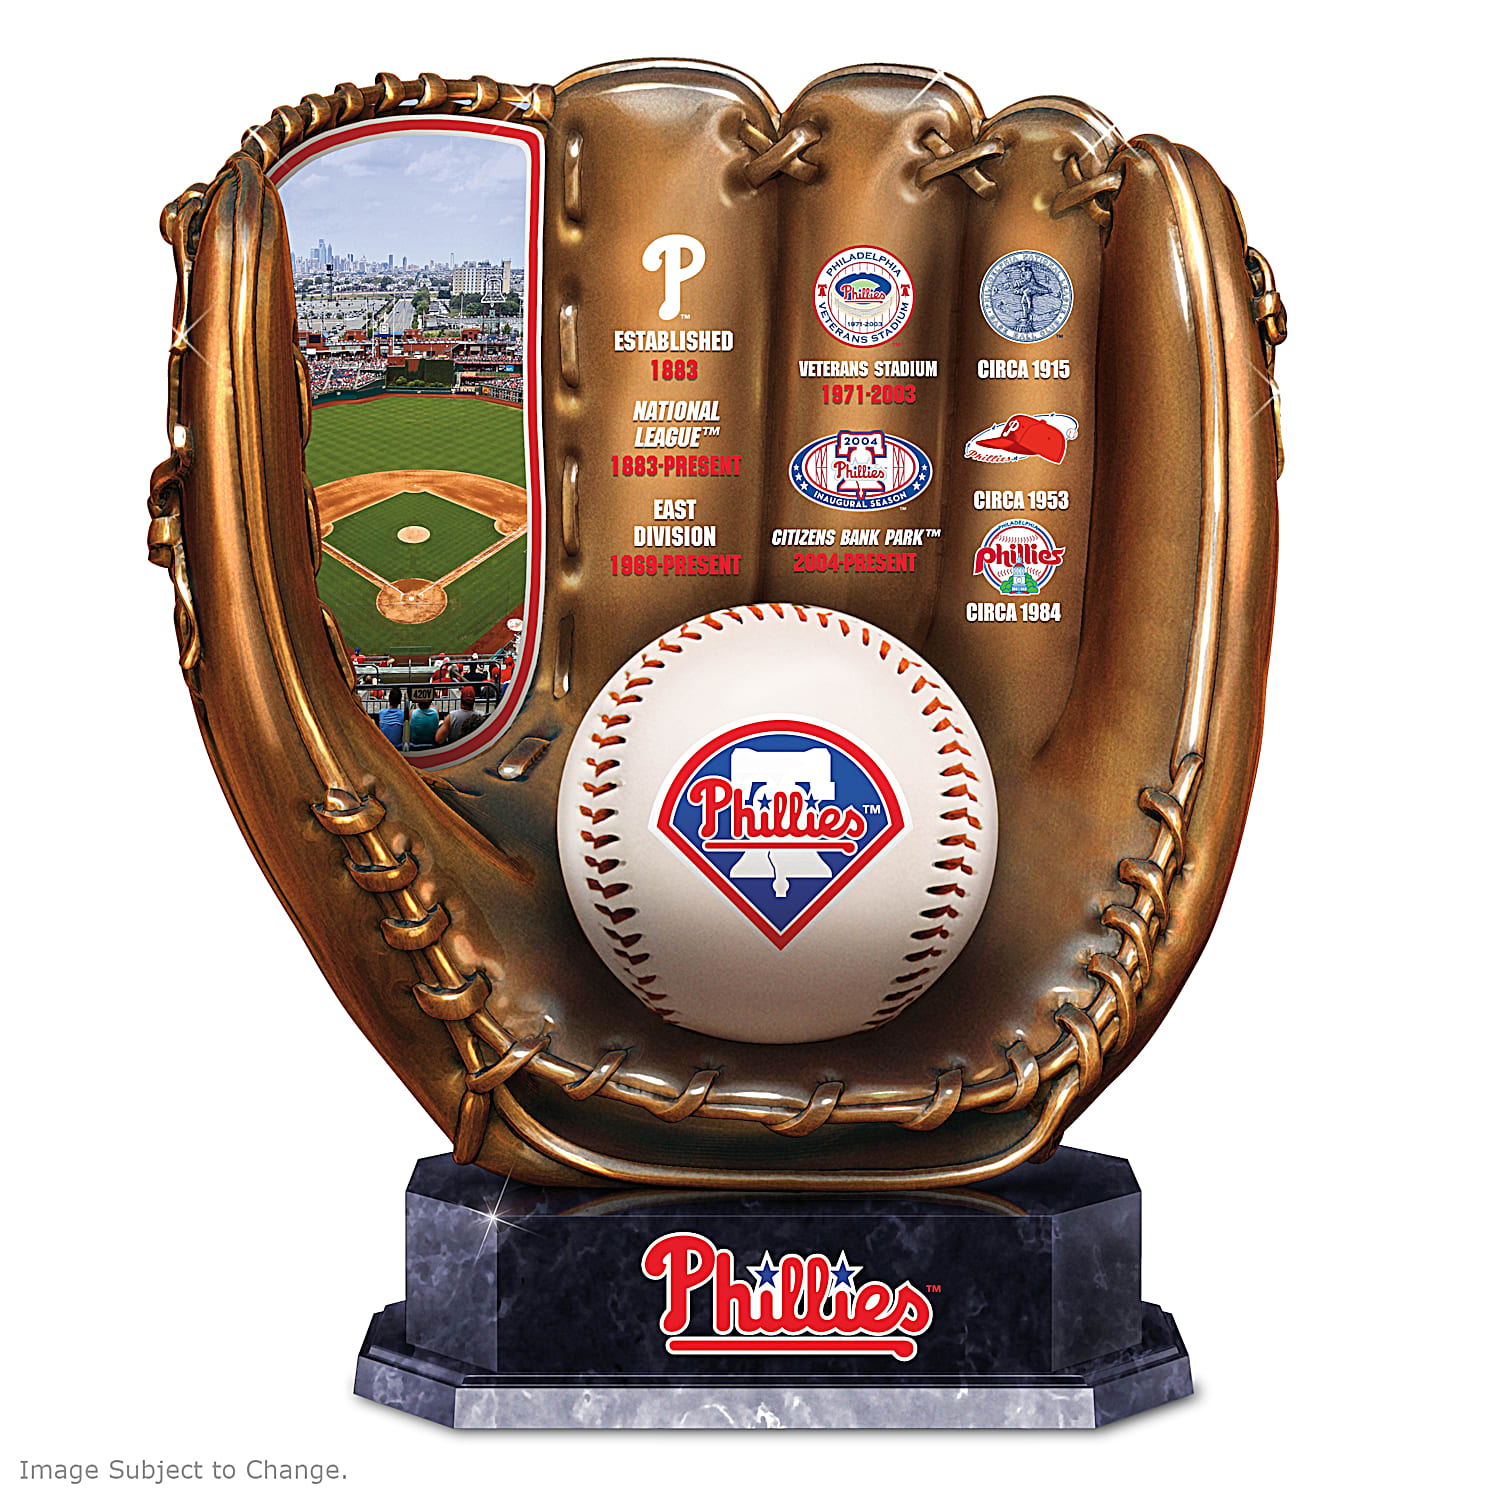 Phillies Celebrate the Flyin' Hawaiian with Baseball Glove Artwork